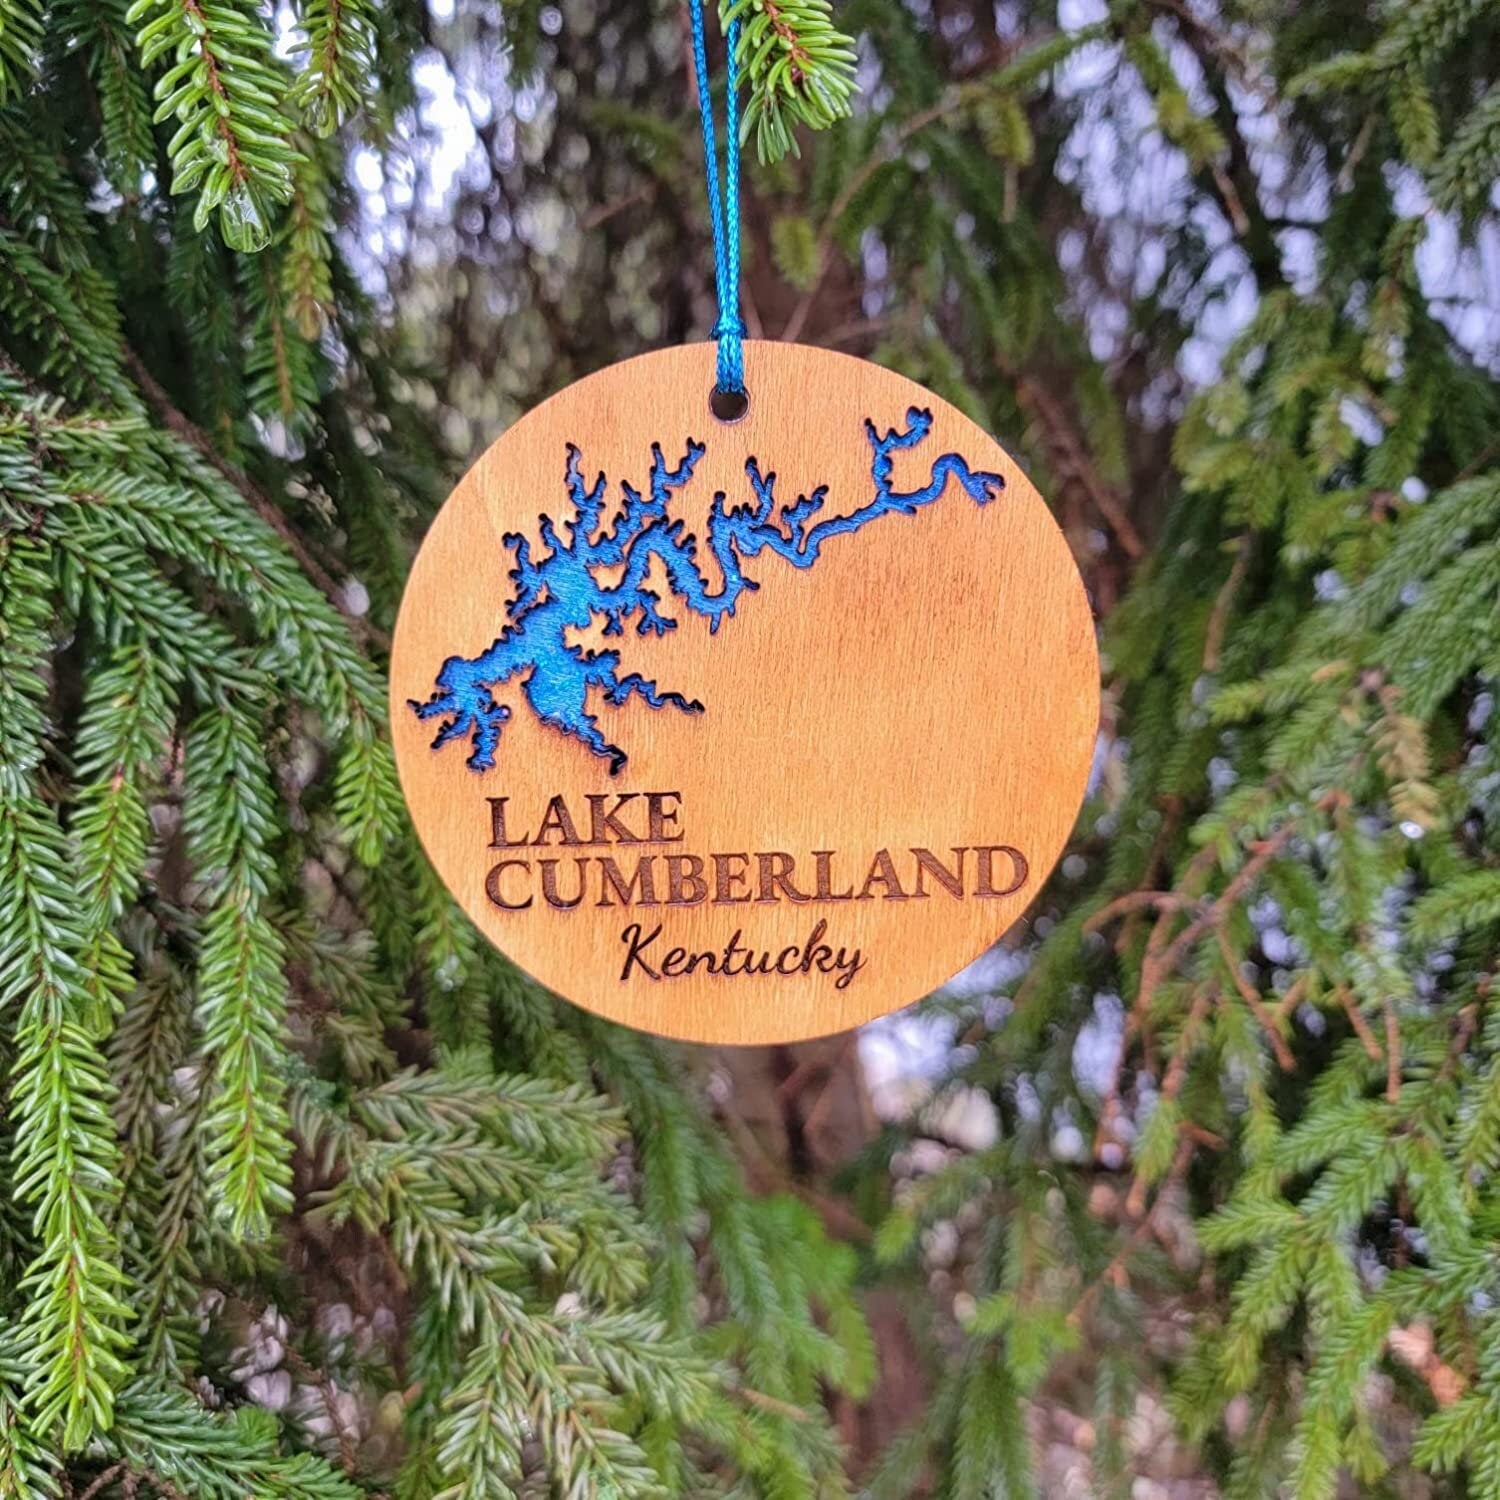 Lake Cumberland Kentucky Ornament 4" Wood Engraved Laser Cut Christmas Ornaments